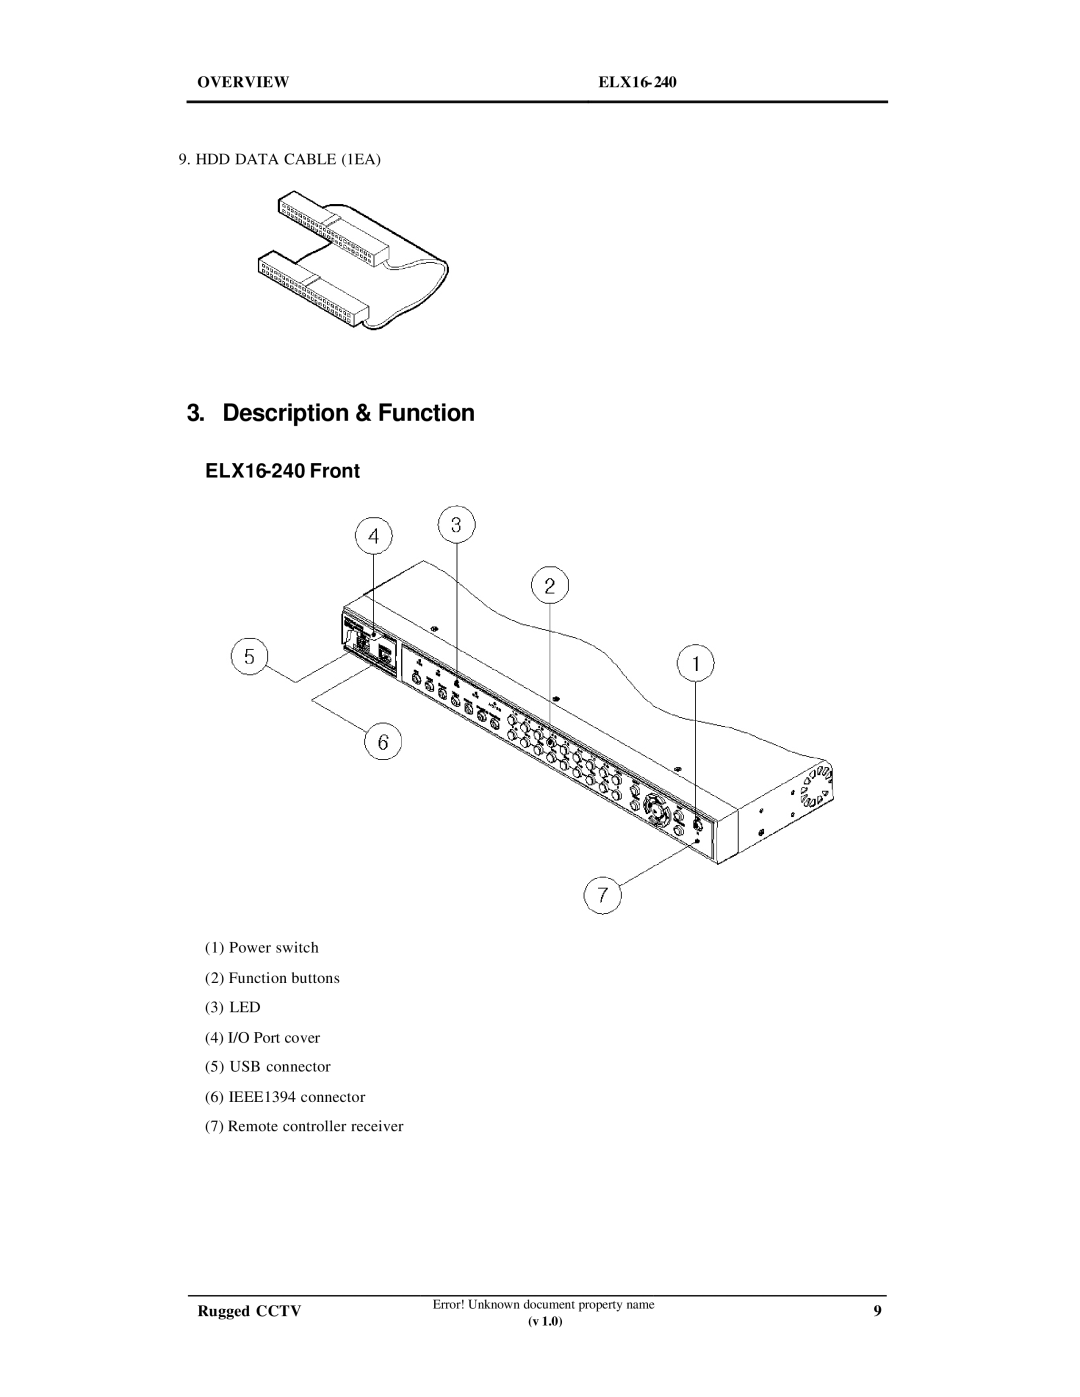 Maxtor manual Description & Function, ELX16-240 Front 